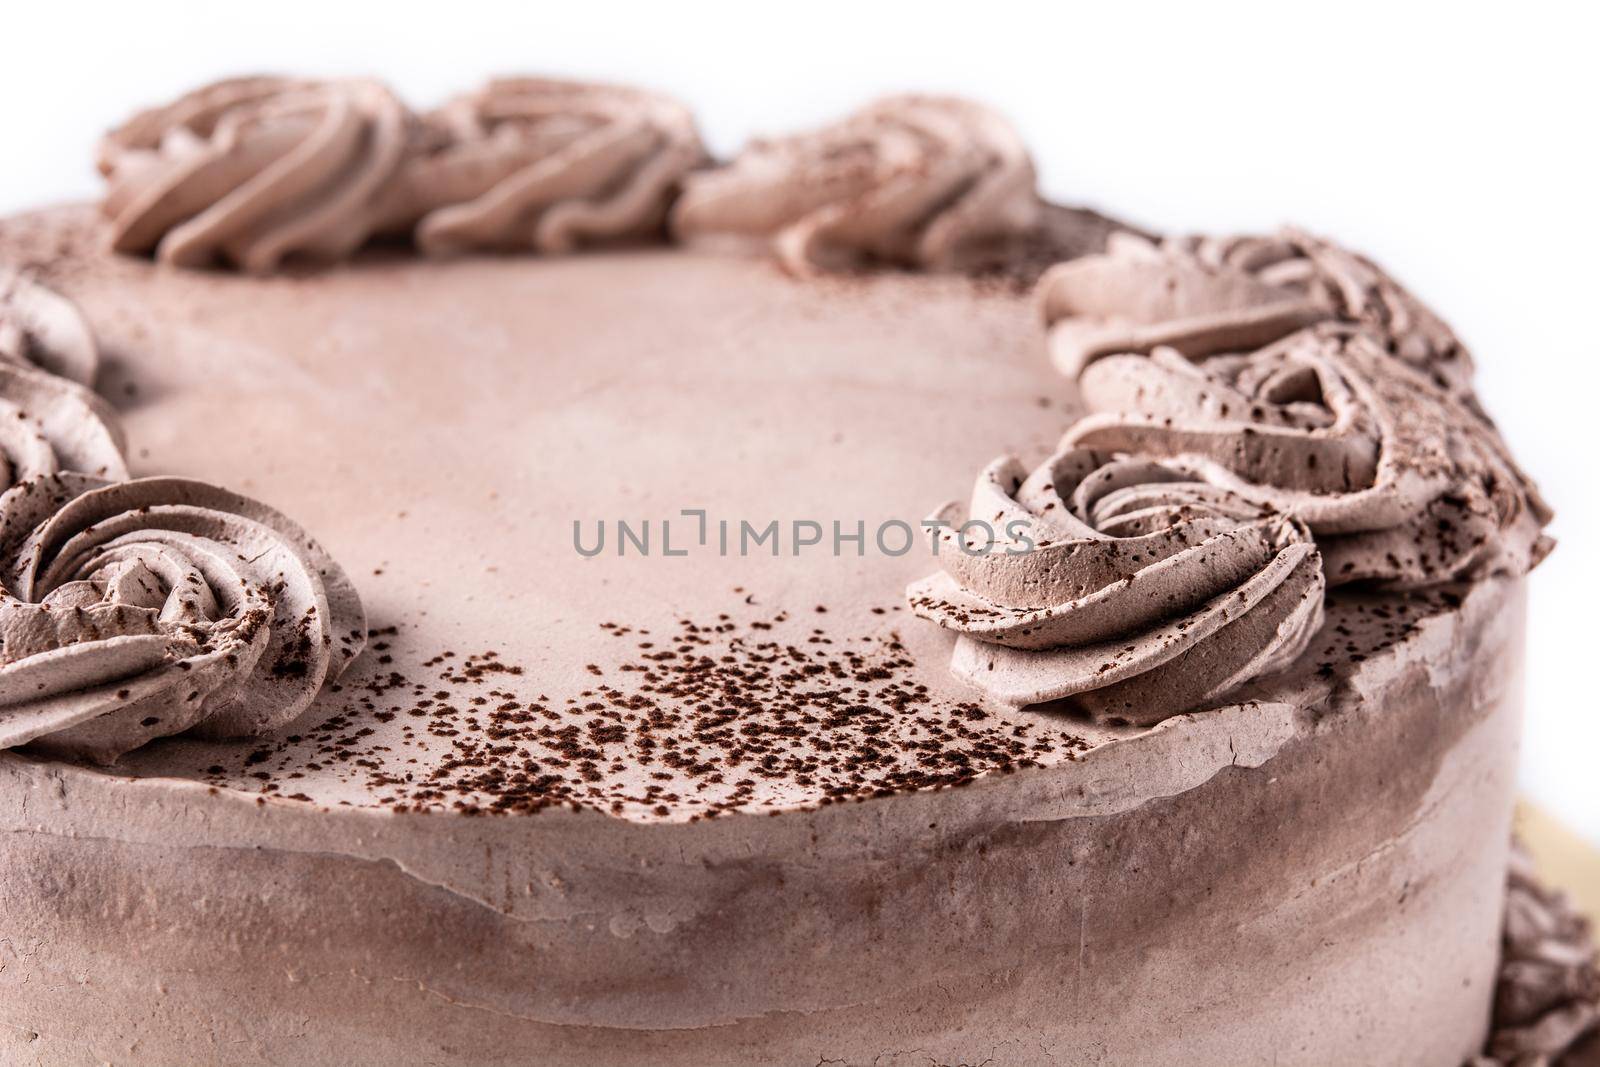 Chocolate truffle cake by chandlervid85